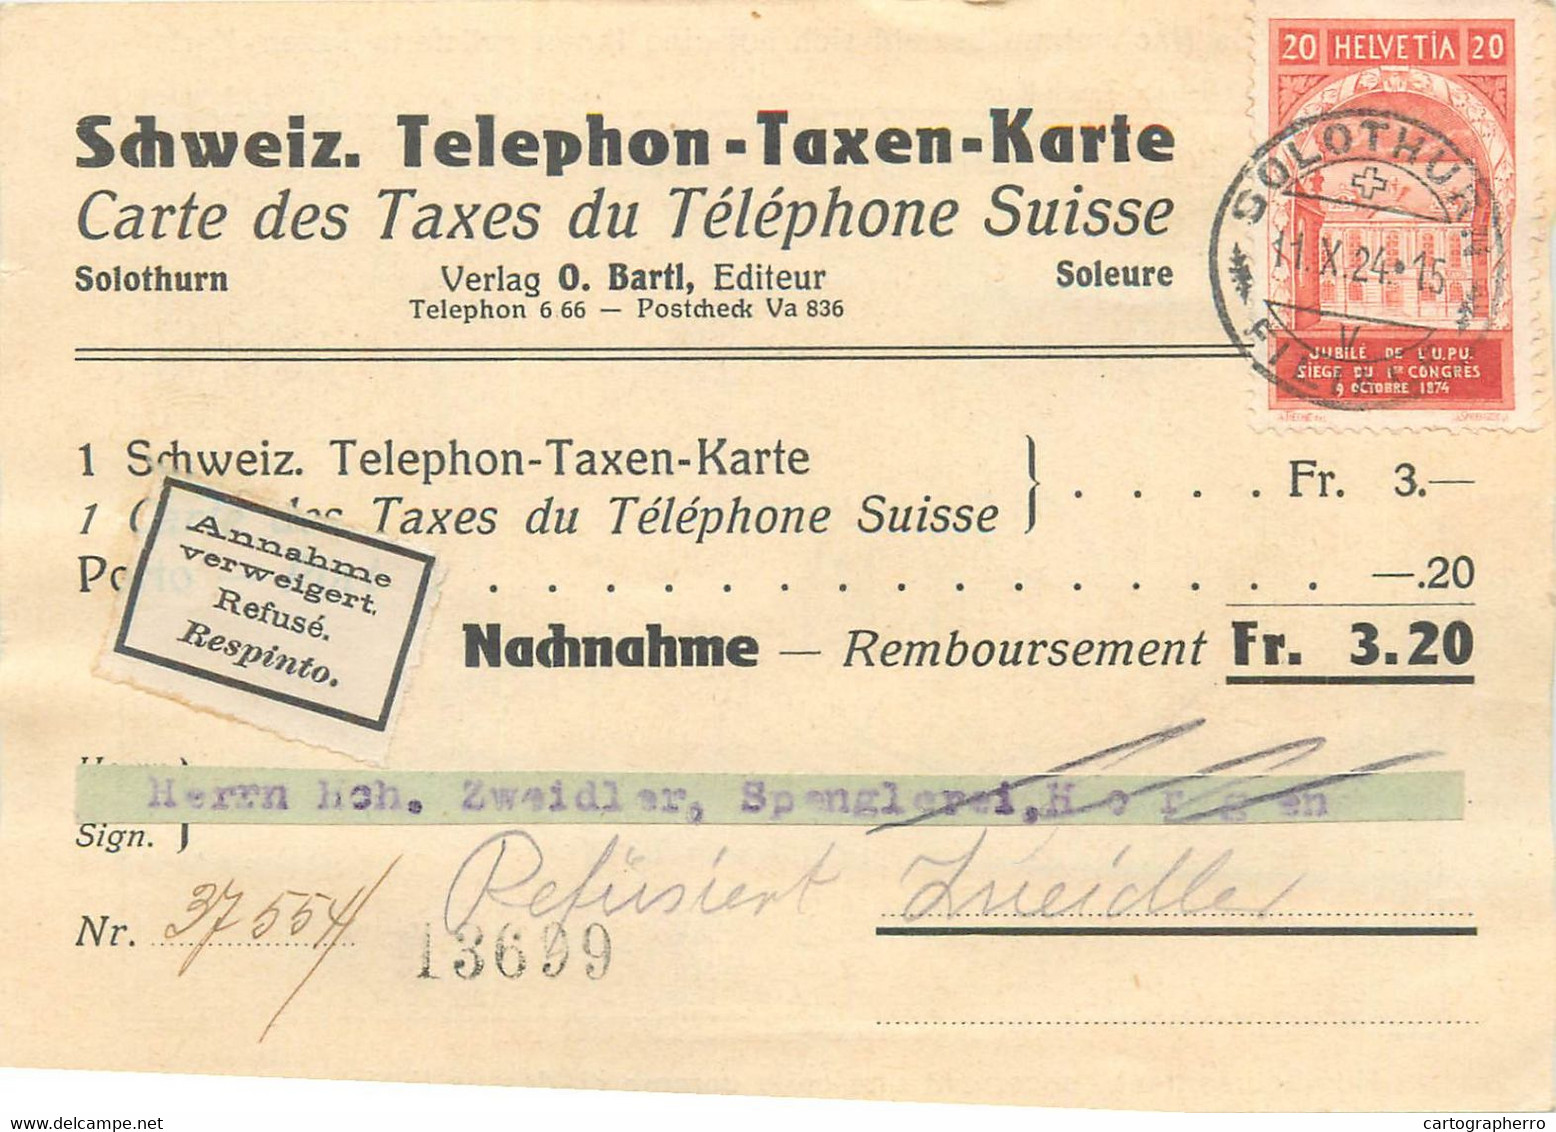 Carte Des Taxes Du Telephone Suisse 1924 Schweiz Telephon Taxen Karte Solothurn Switzerland Map - Télégraphe